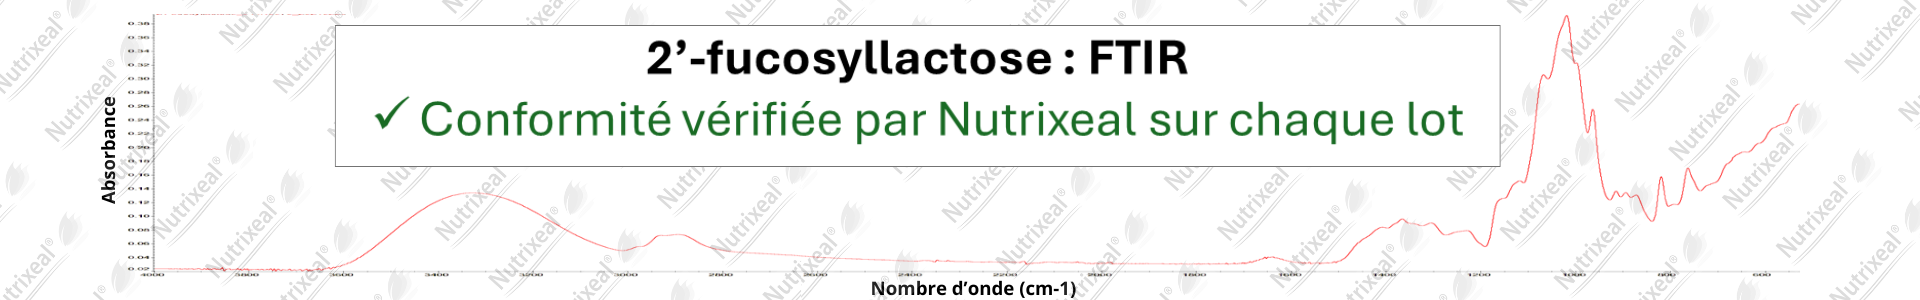 Spectre IR du 2-fucosyllactose contrôle analytique interne de Nutrixeal